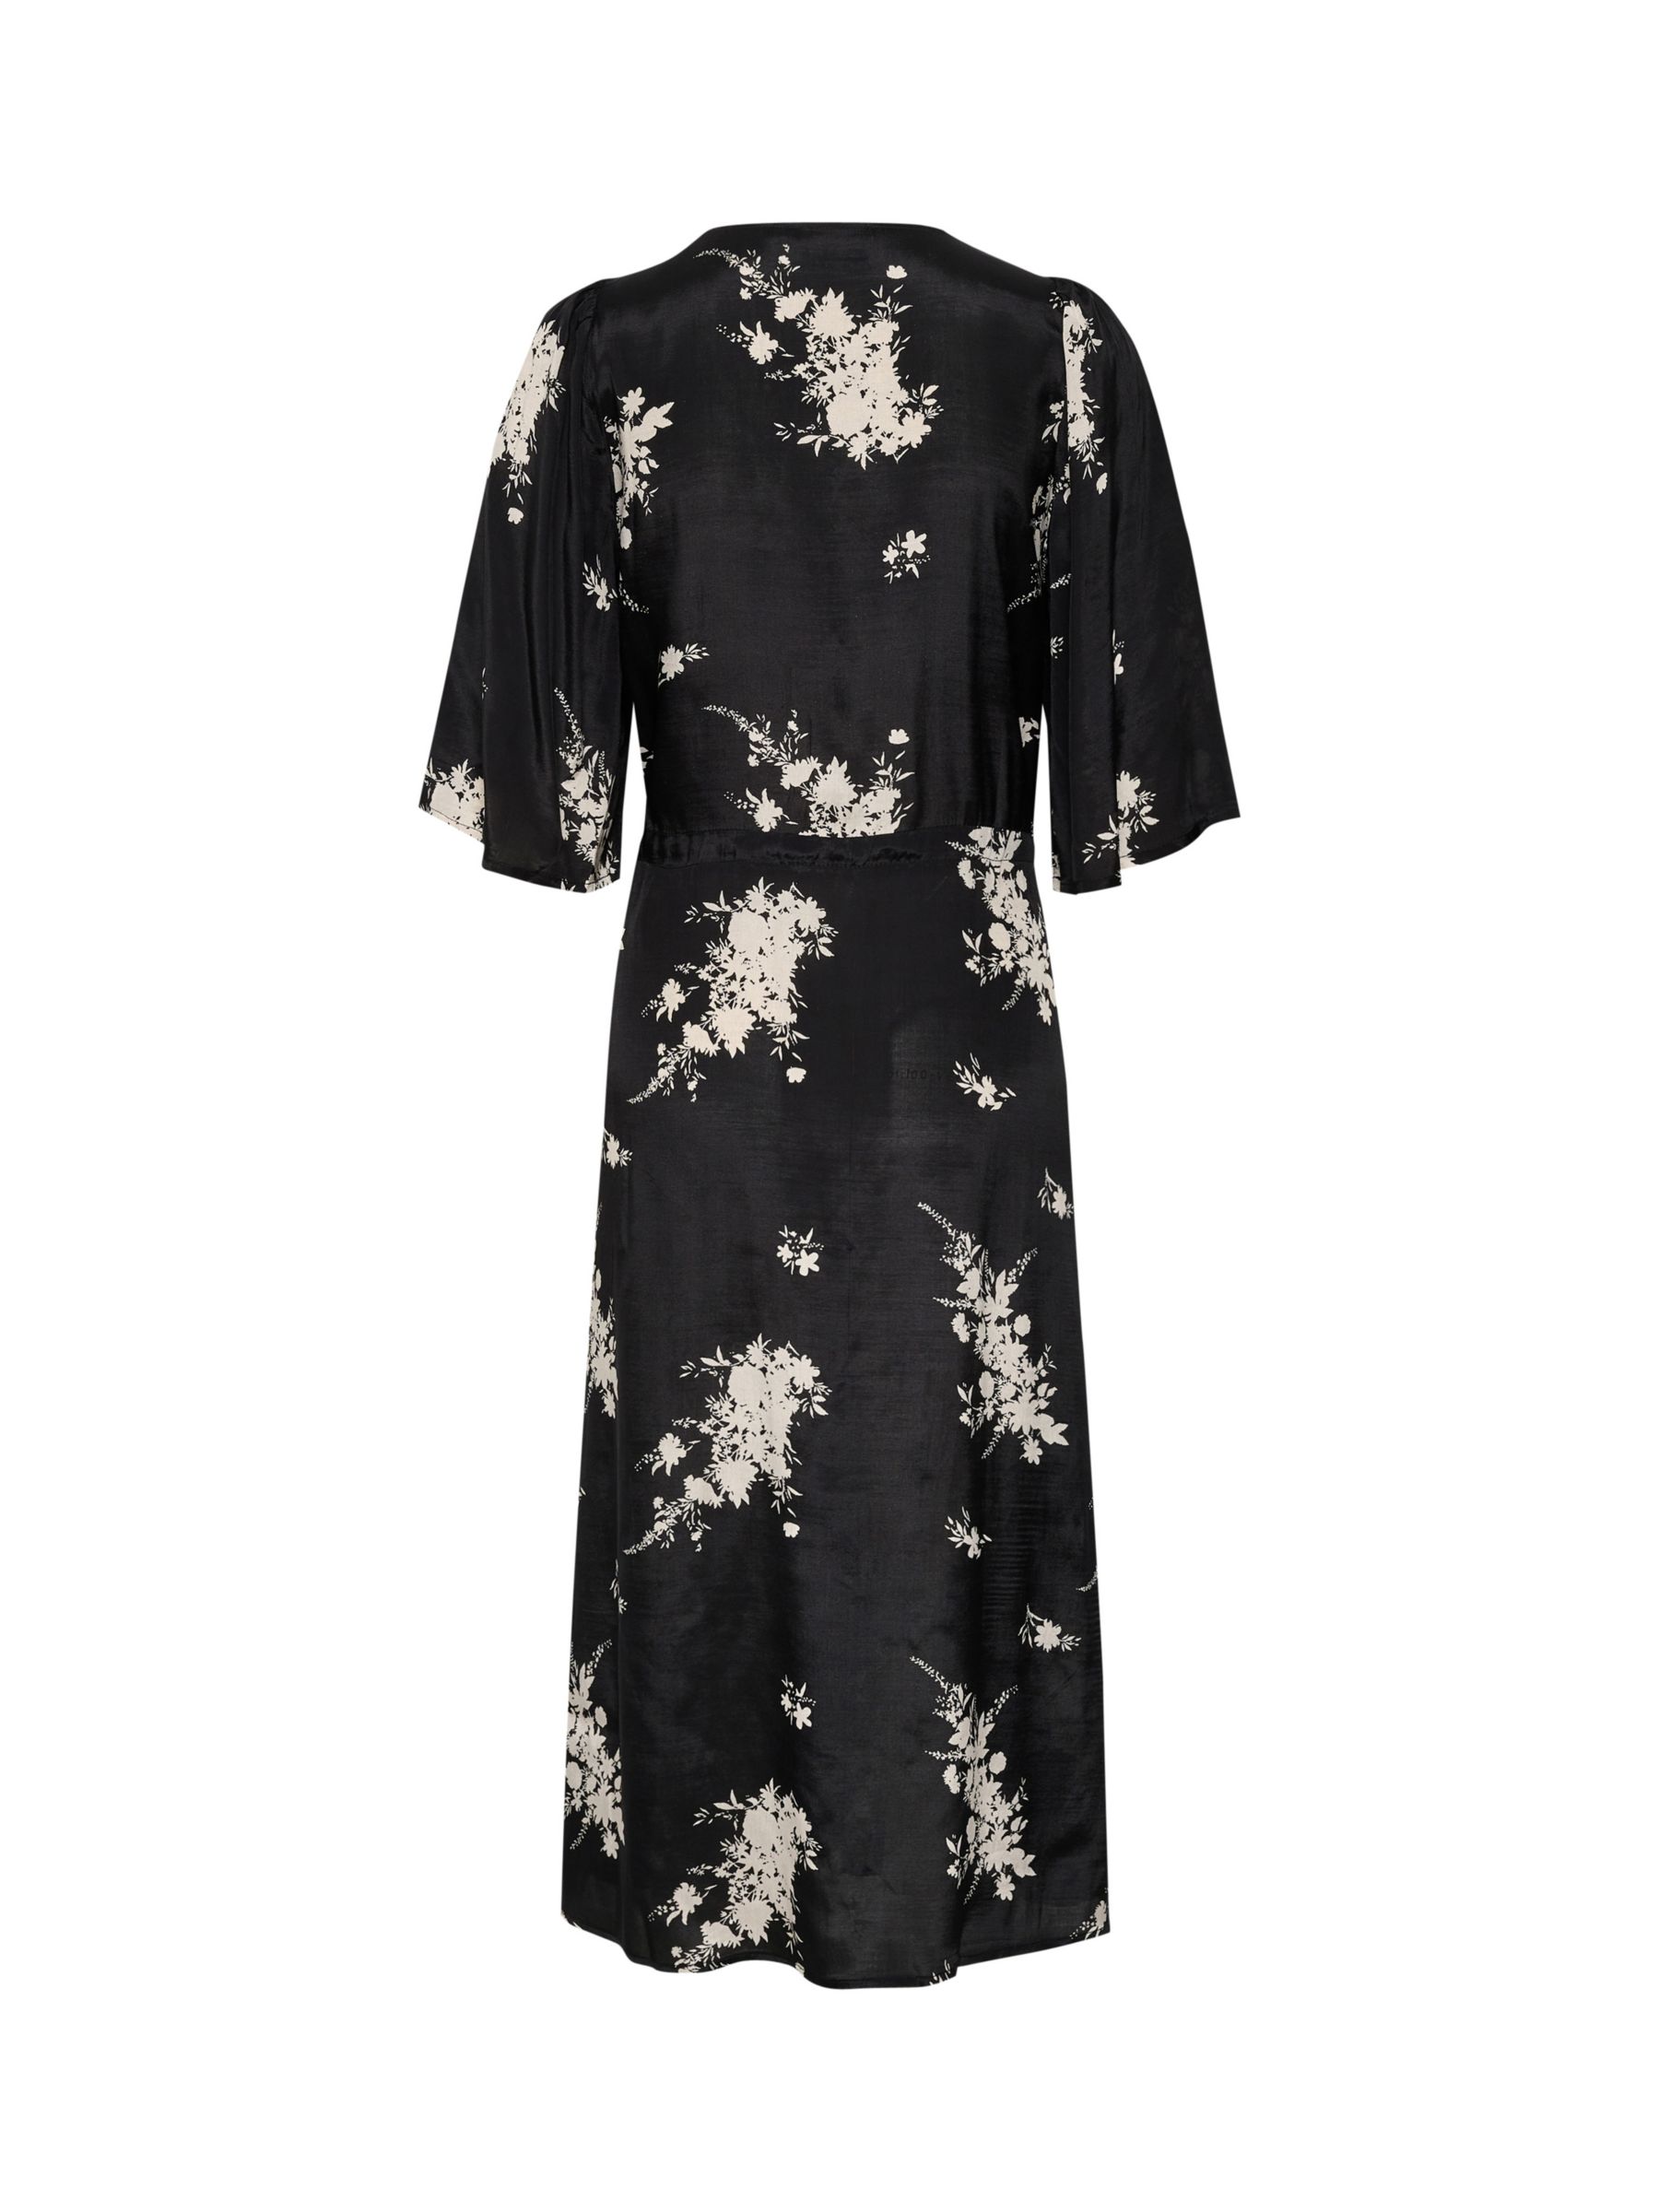 KAFFE Gilla Floral Midi Dress, Black/Antique at John Lewis & Partners